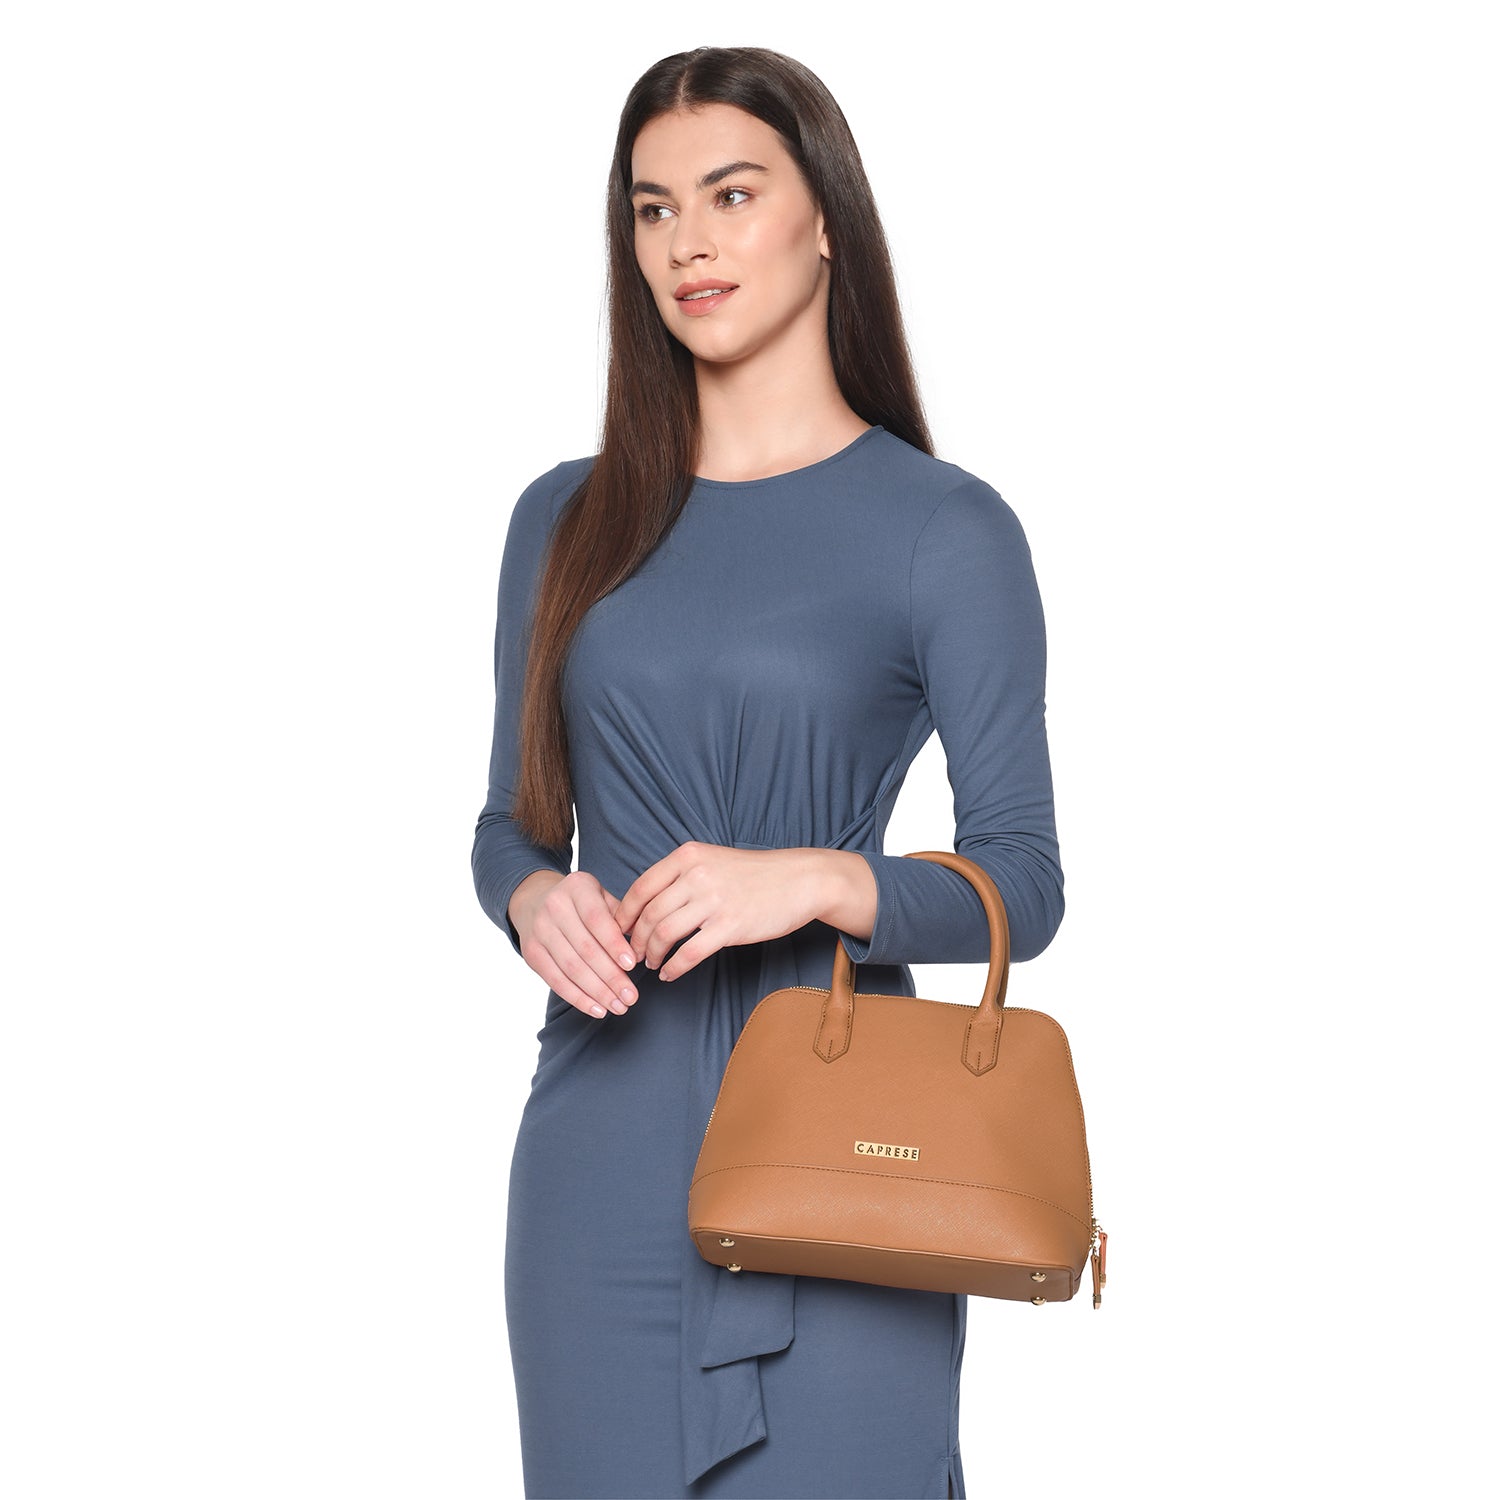 Brand new Cabrelli Womens Handbag Grey (s)